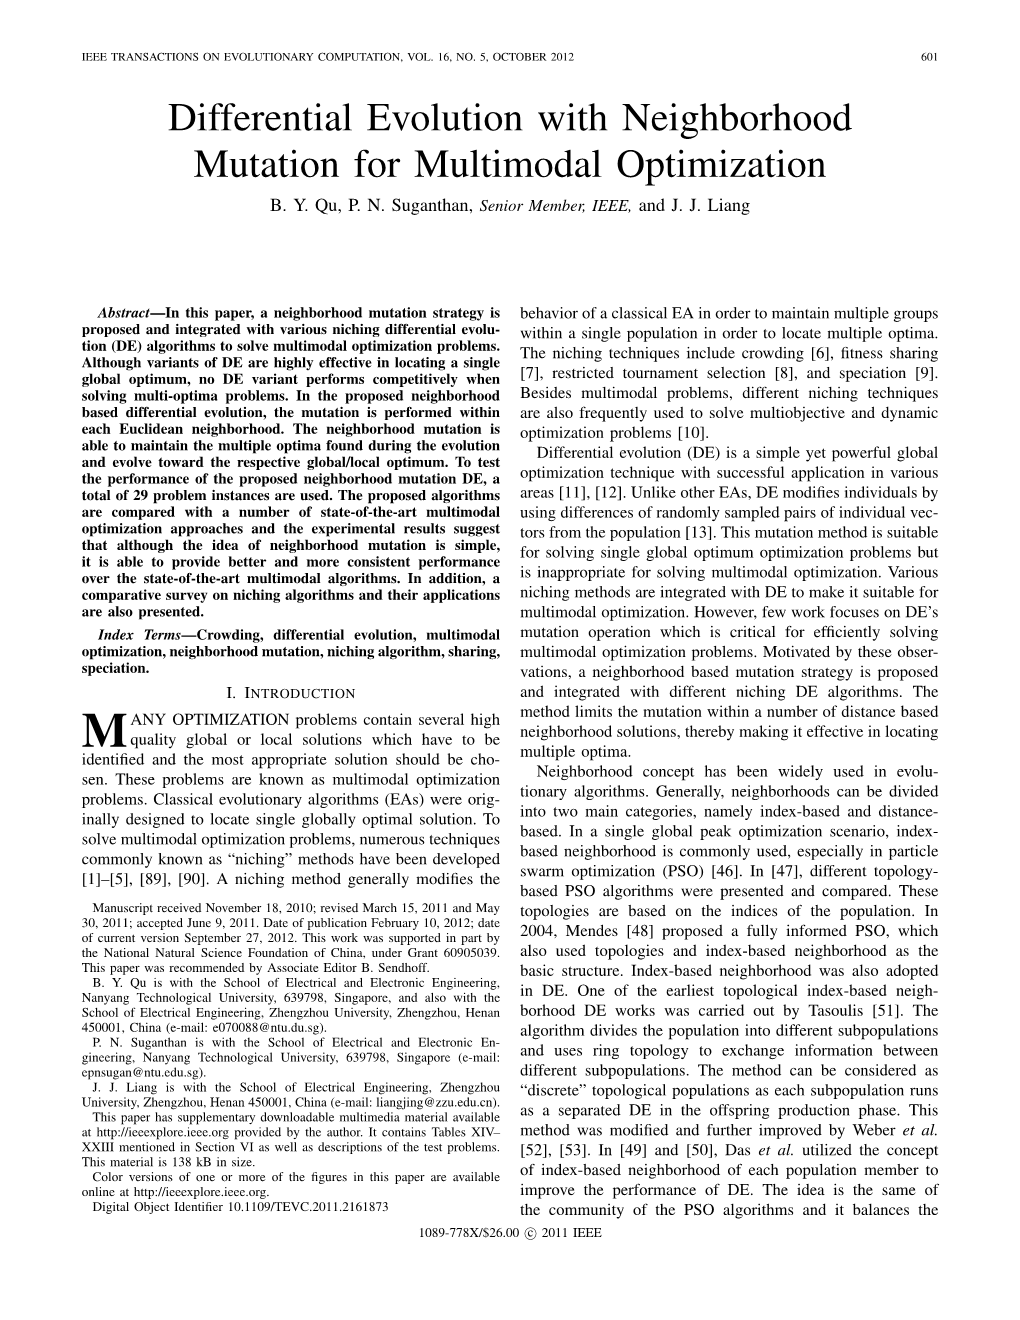 Differential Evolution with Neighborhood Mutation for Multimodal Optimization B